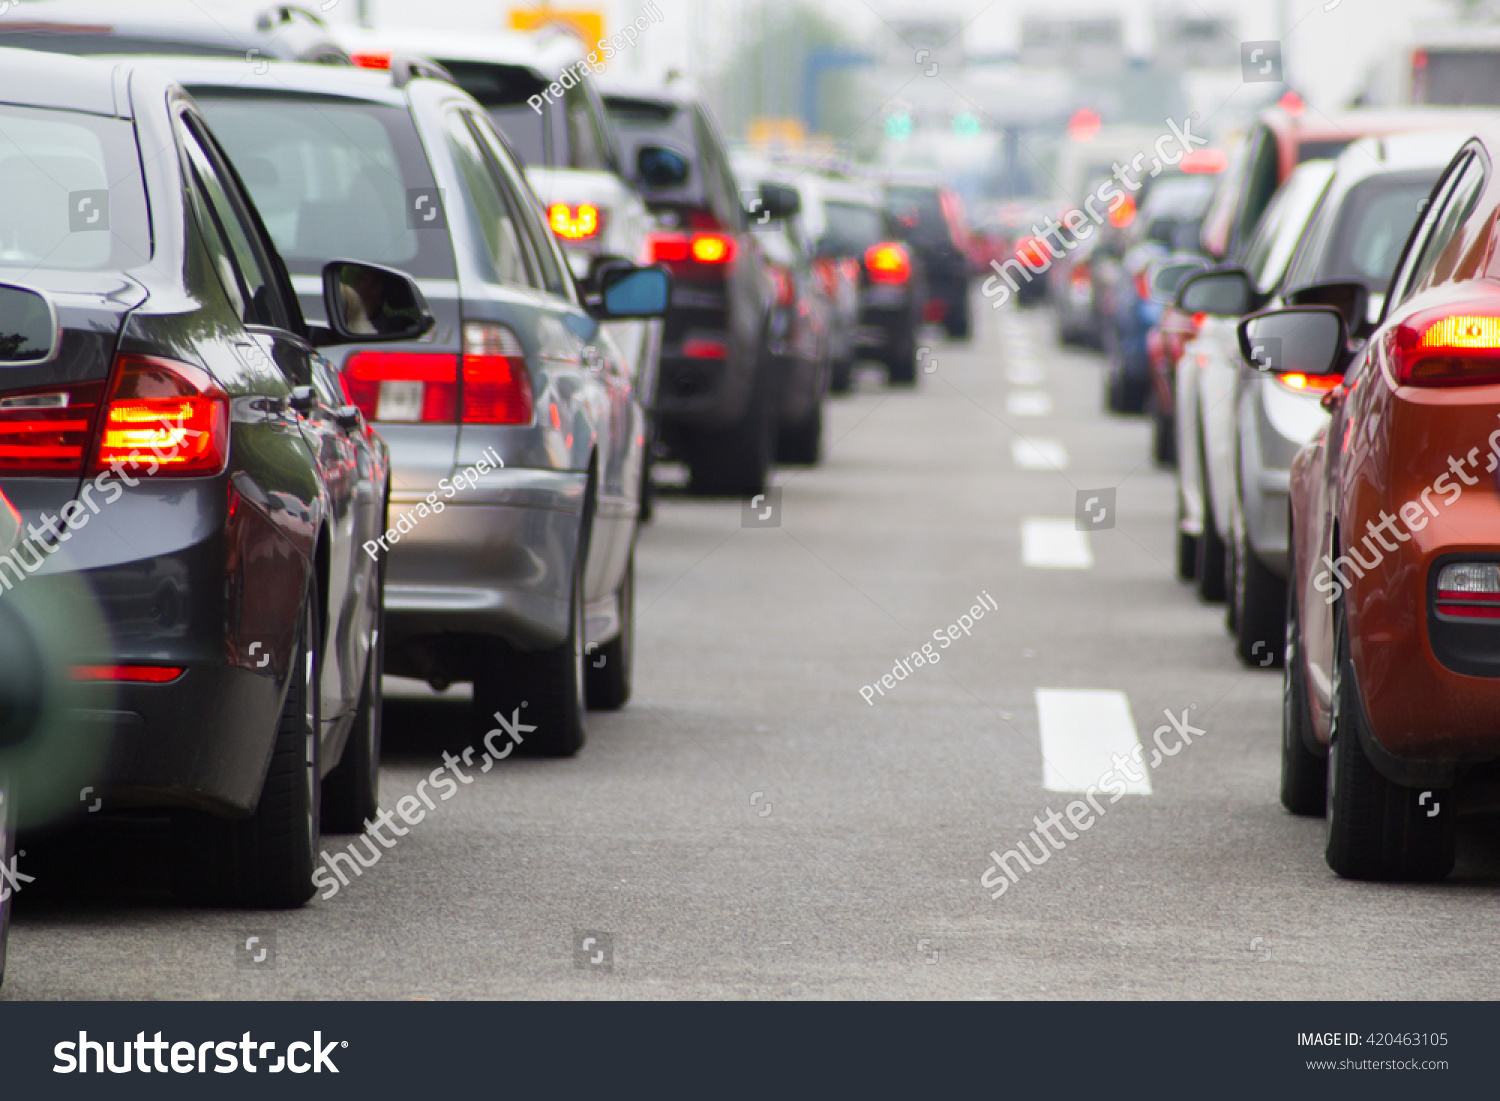 Cars on highway in traffic jam #420463105